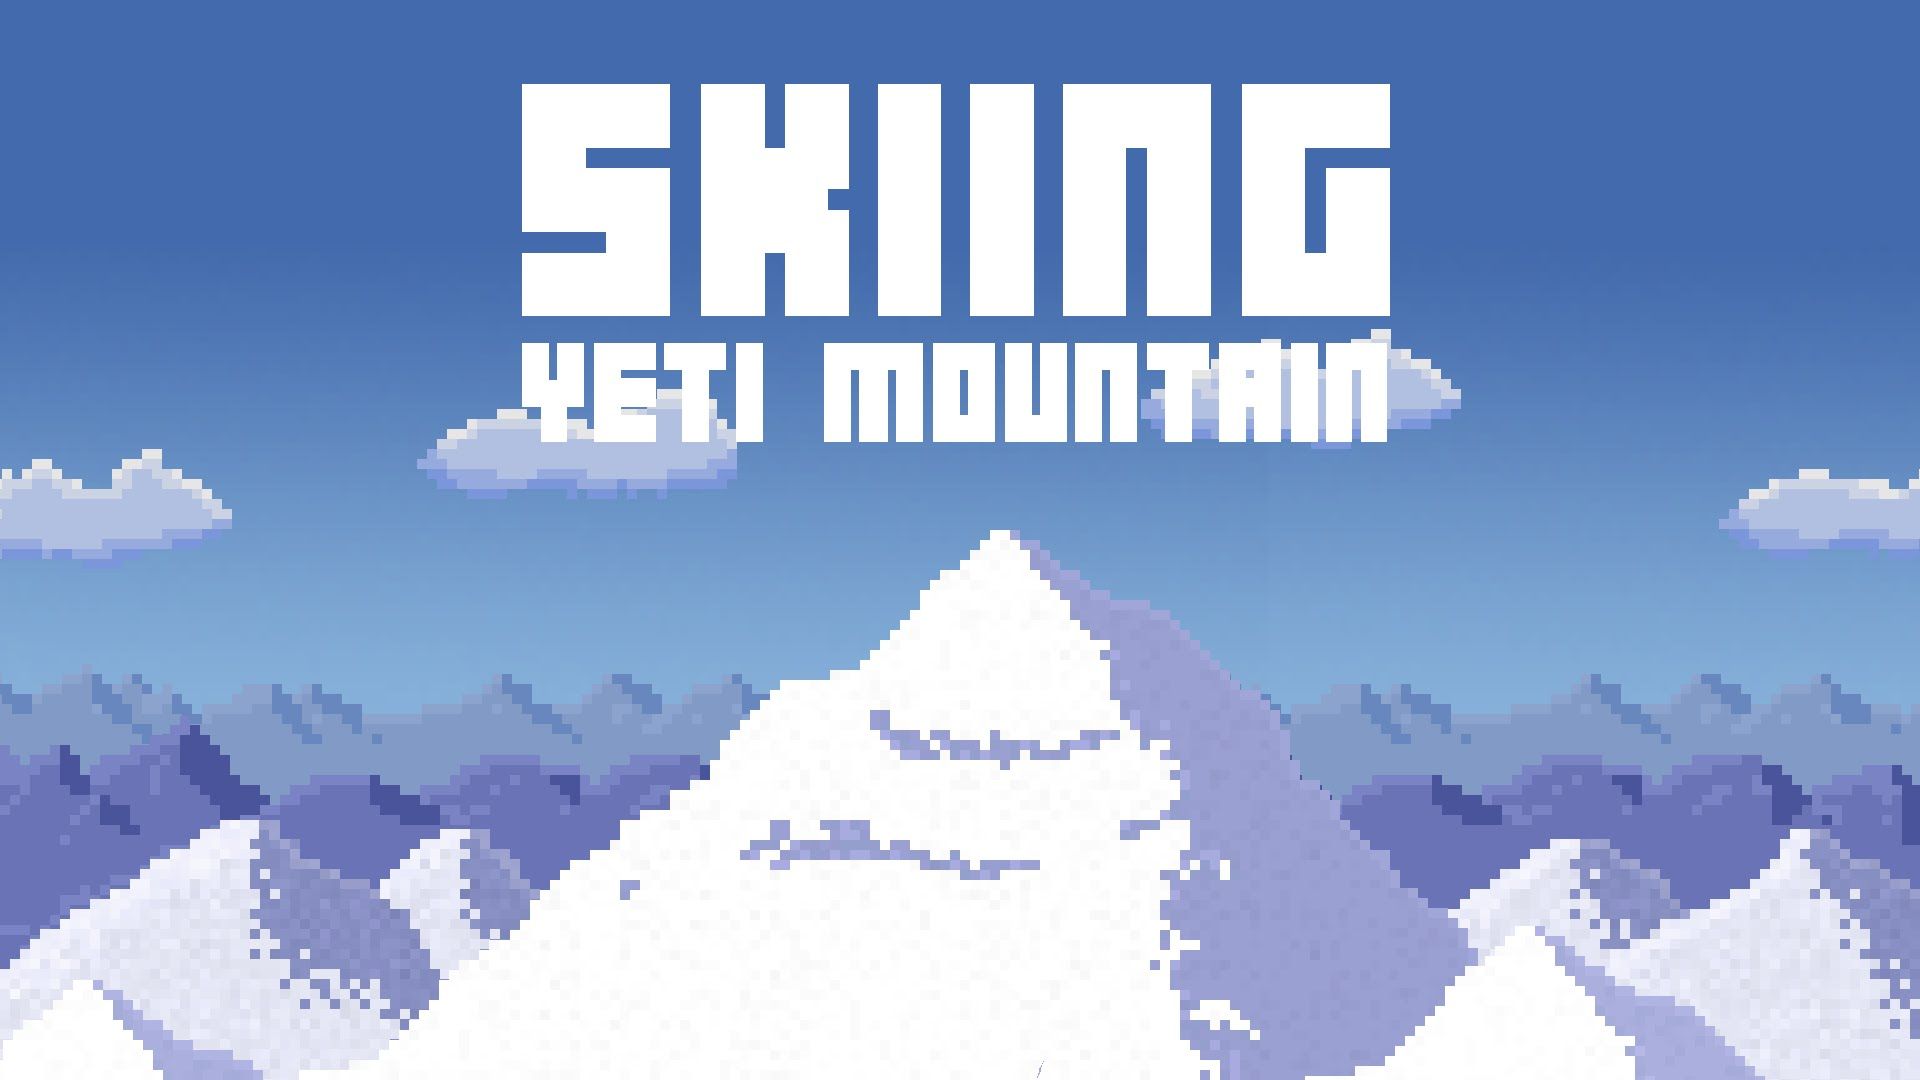 Skiing Yeti Mountain เกมสกีสุดคลาสสิกหนีเยติกินคน